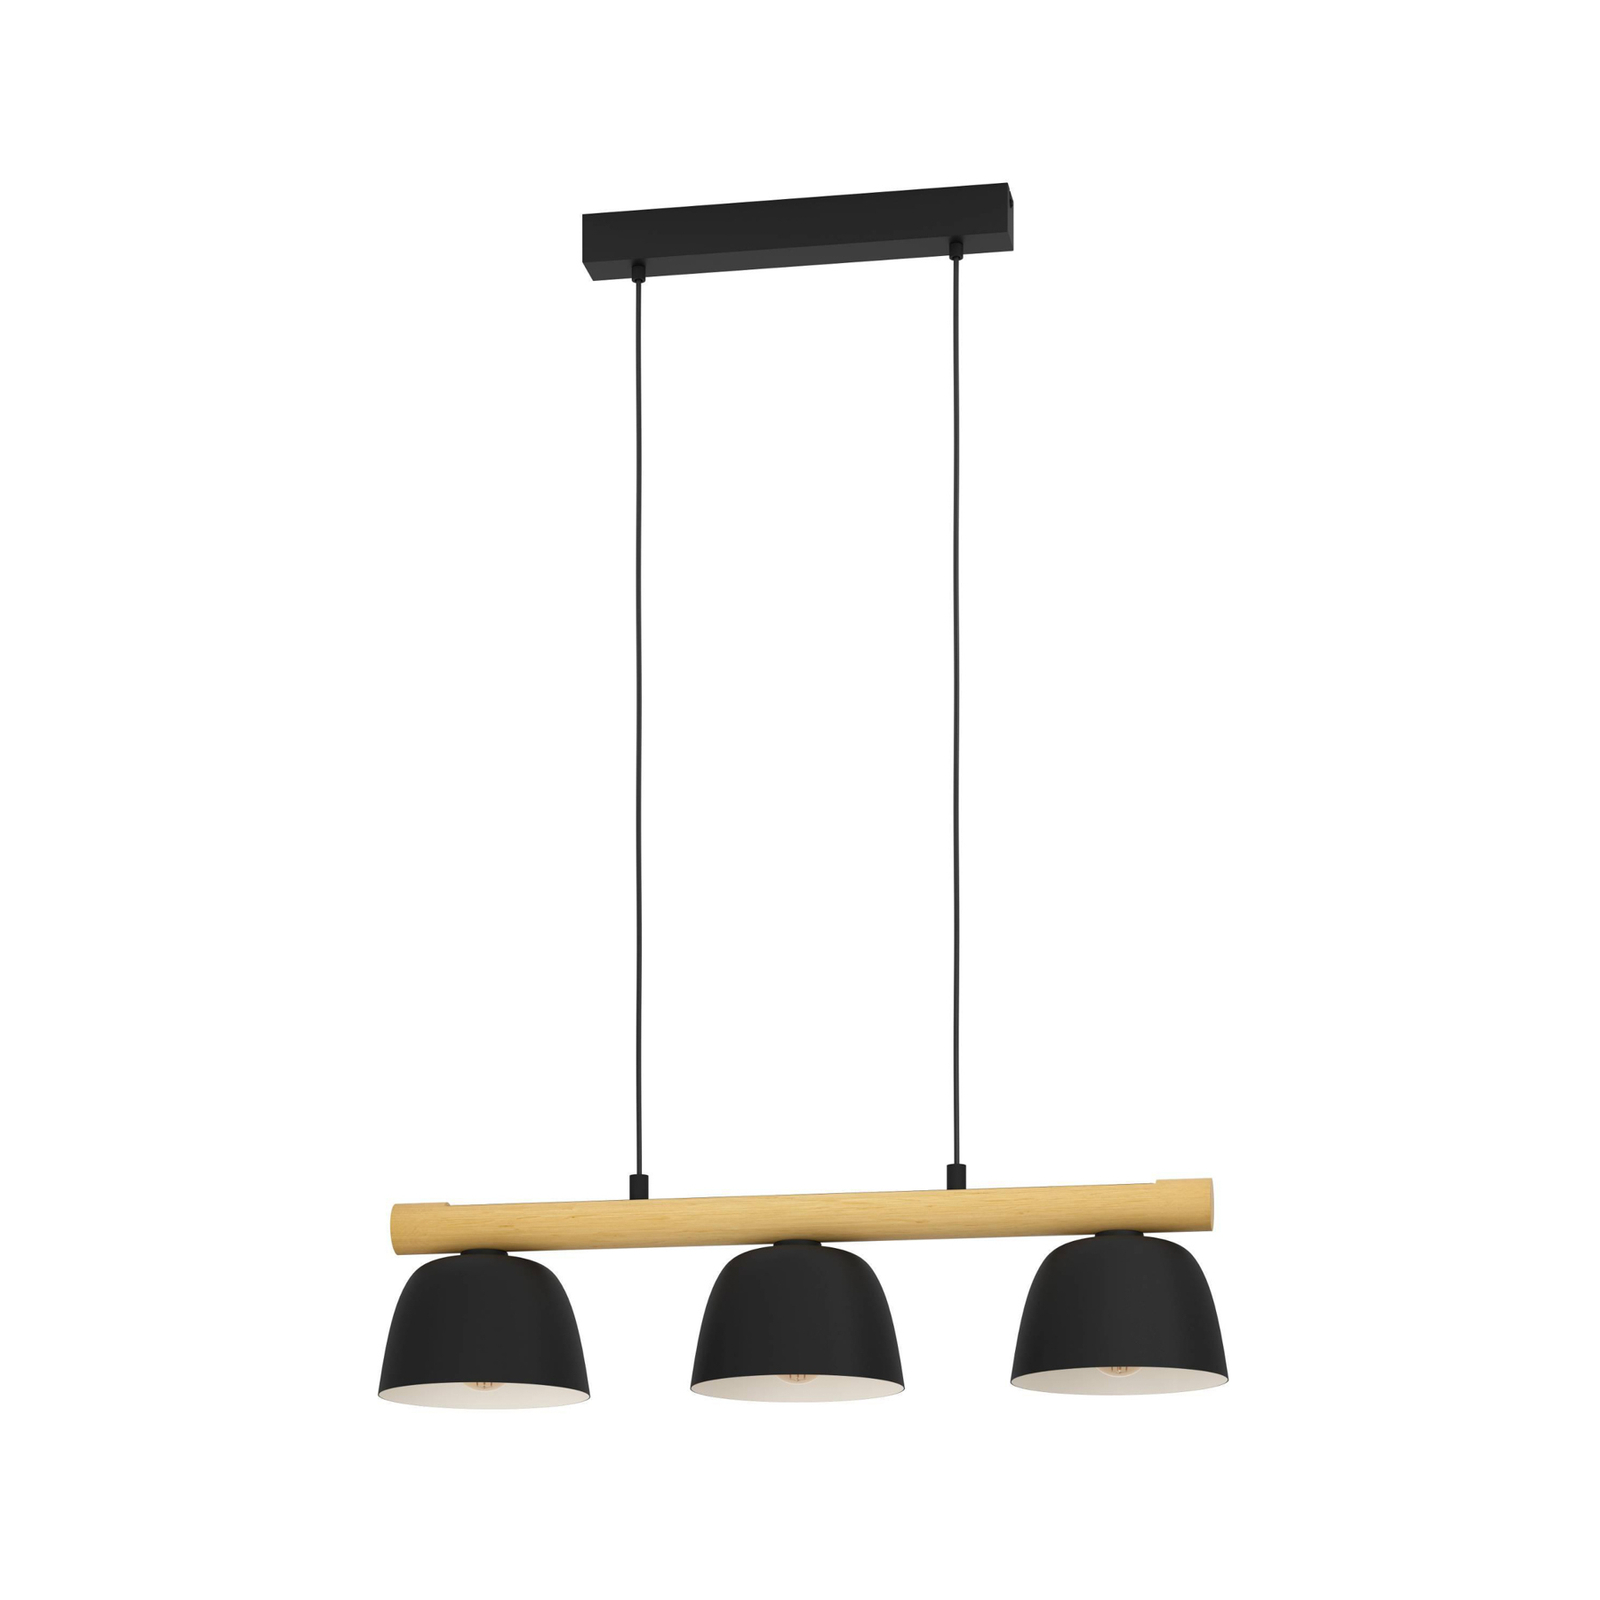 Suspension Sherburn, longueur 77 cm, noir/brun, 3 lampes